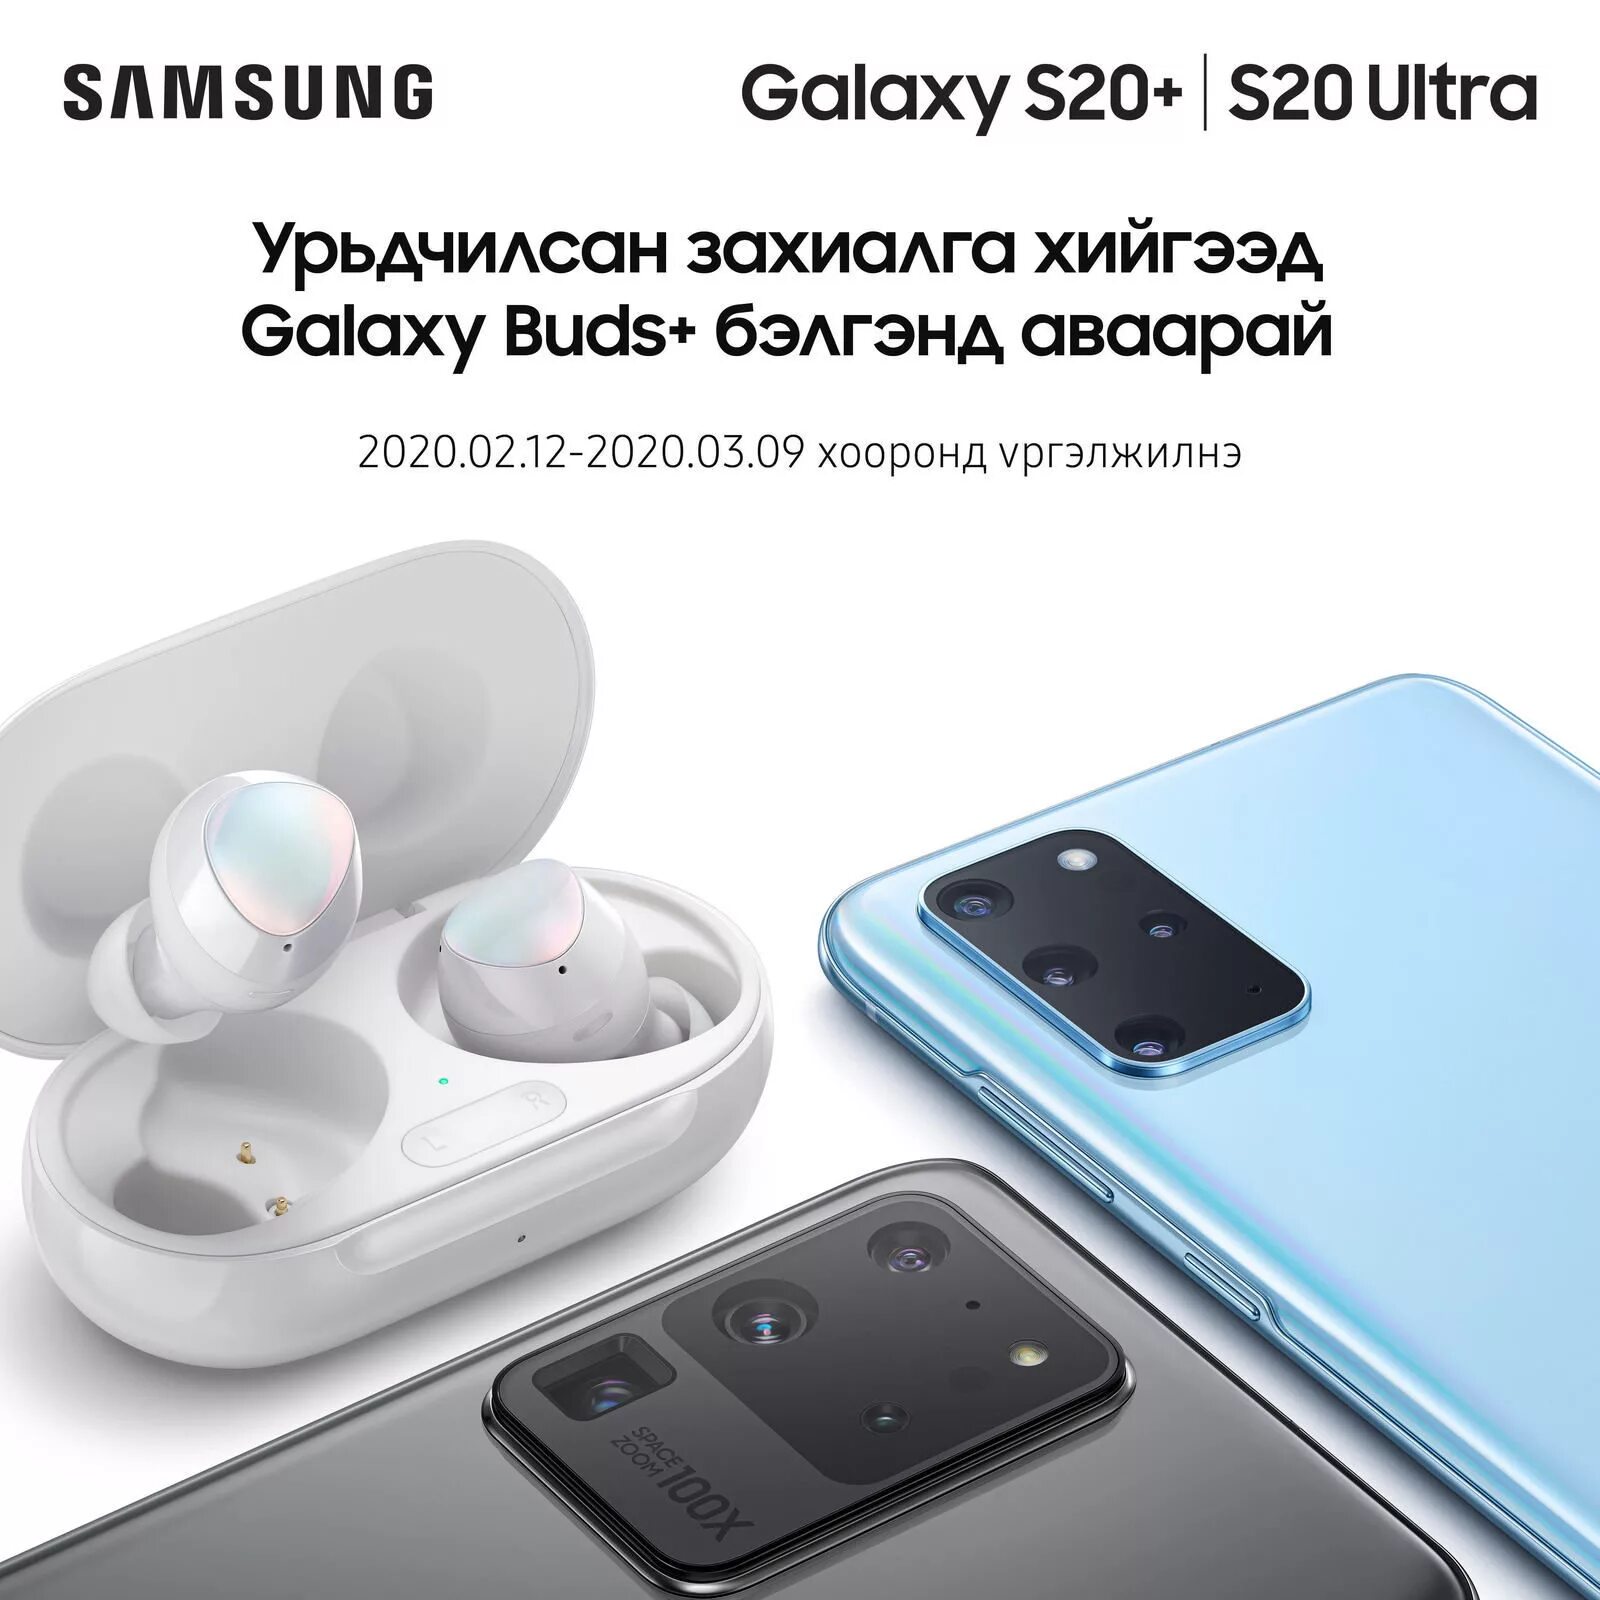 Galaxy s20 ultra купить. Samsung Galaxy s20 Ultra Plus характеристики. Samsung Galaxy s20 Ultra характеристики. Samsung Galaxy s20 акция. Samsung Galaxy s20 Ultra акция.